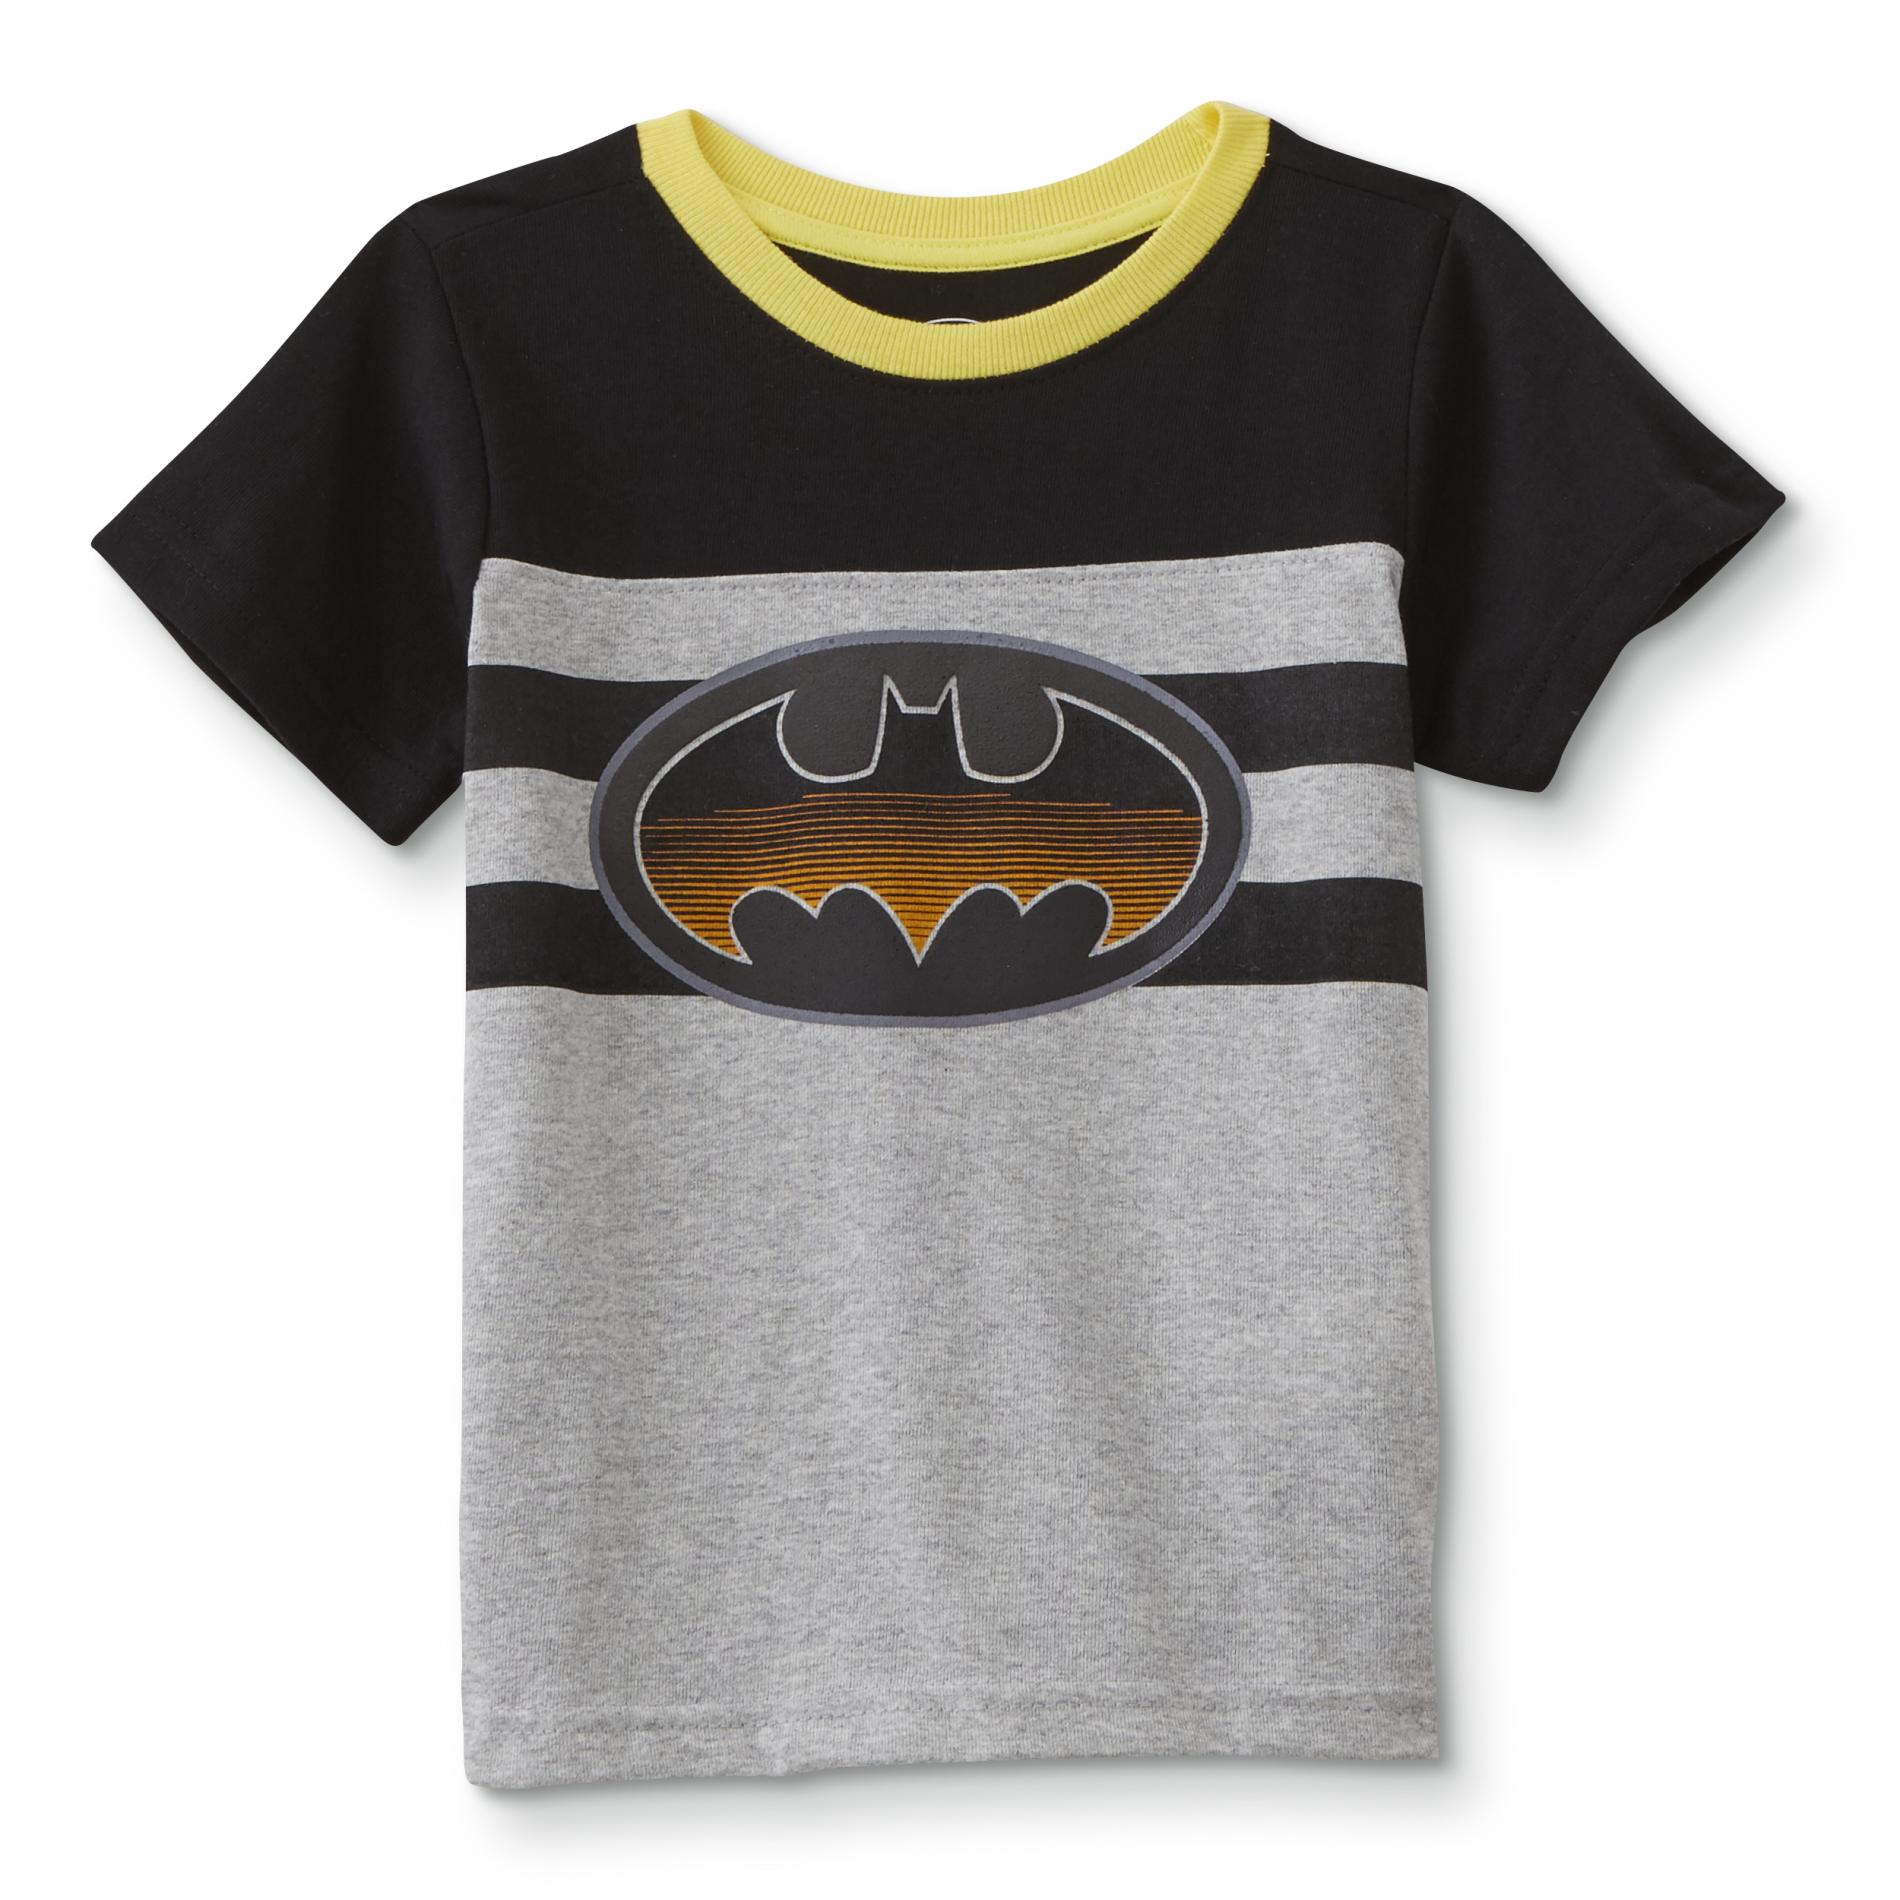 Batman Toddler Boys' Graphic T-Shirt - Bat Symbol